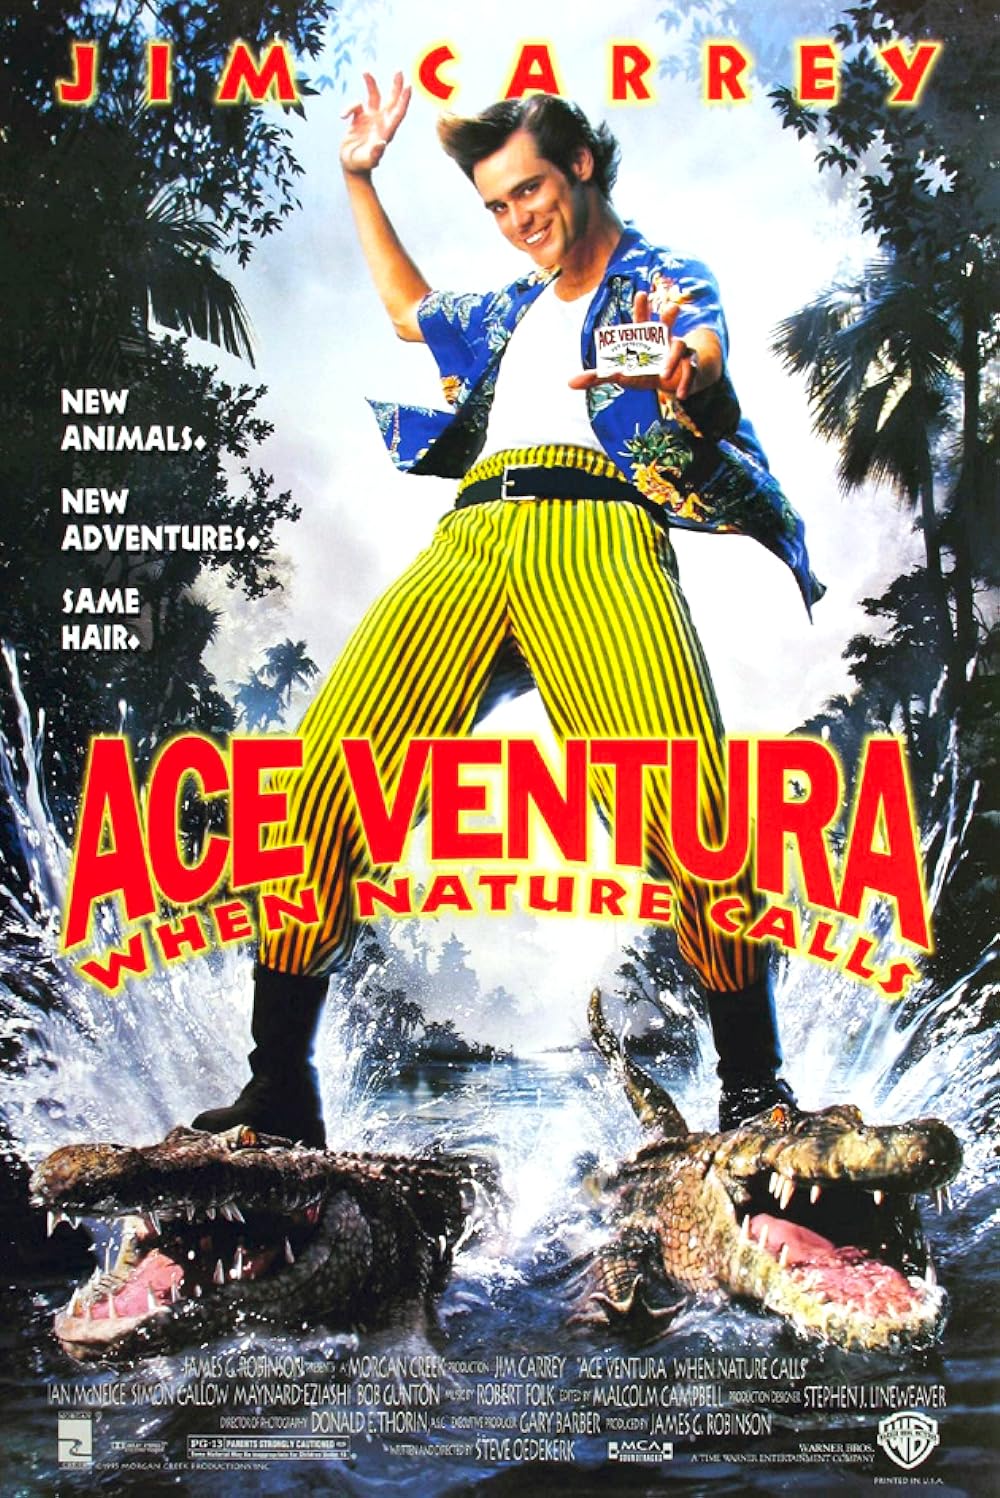 Ace Ventura When Nature Calls 1995 Hindi Dual Audio 1080p | 720p | 480p BluRay ESub Downlaod